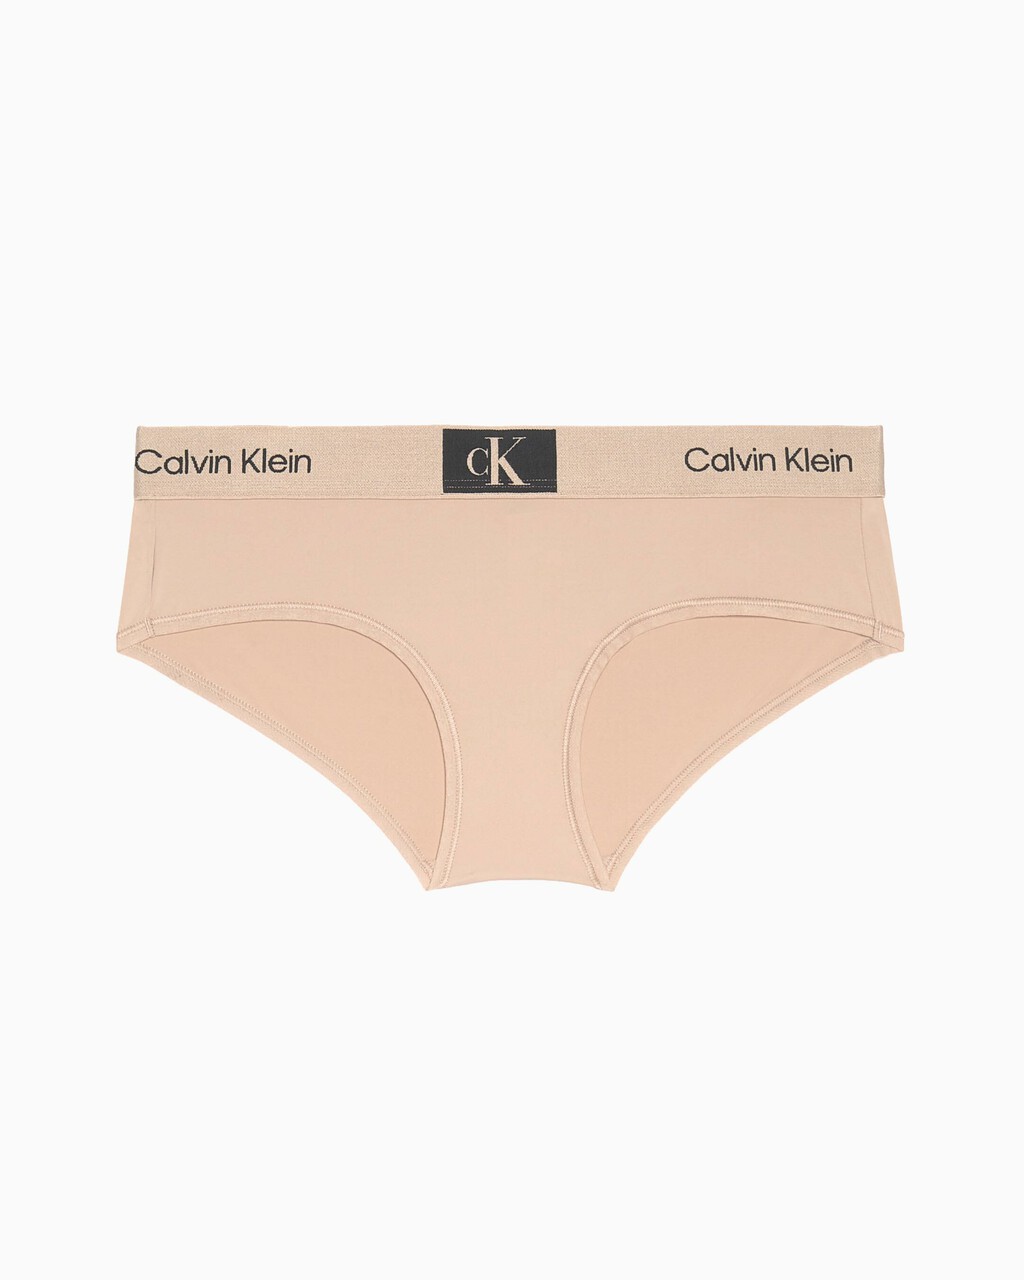 CK1996  Calvin Klein Hong Kong